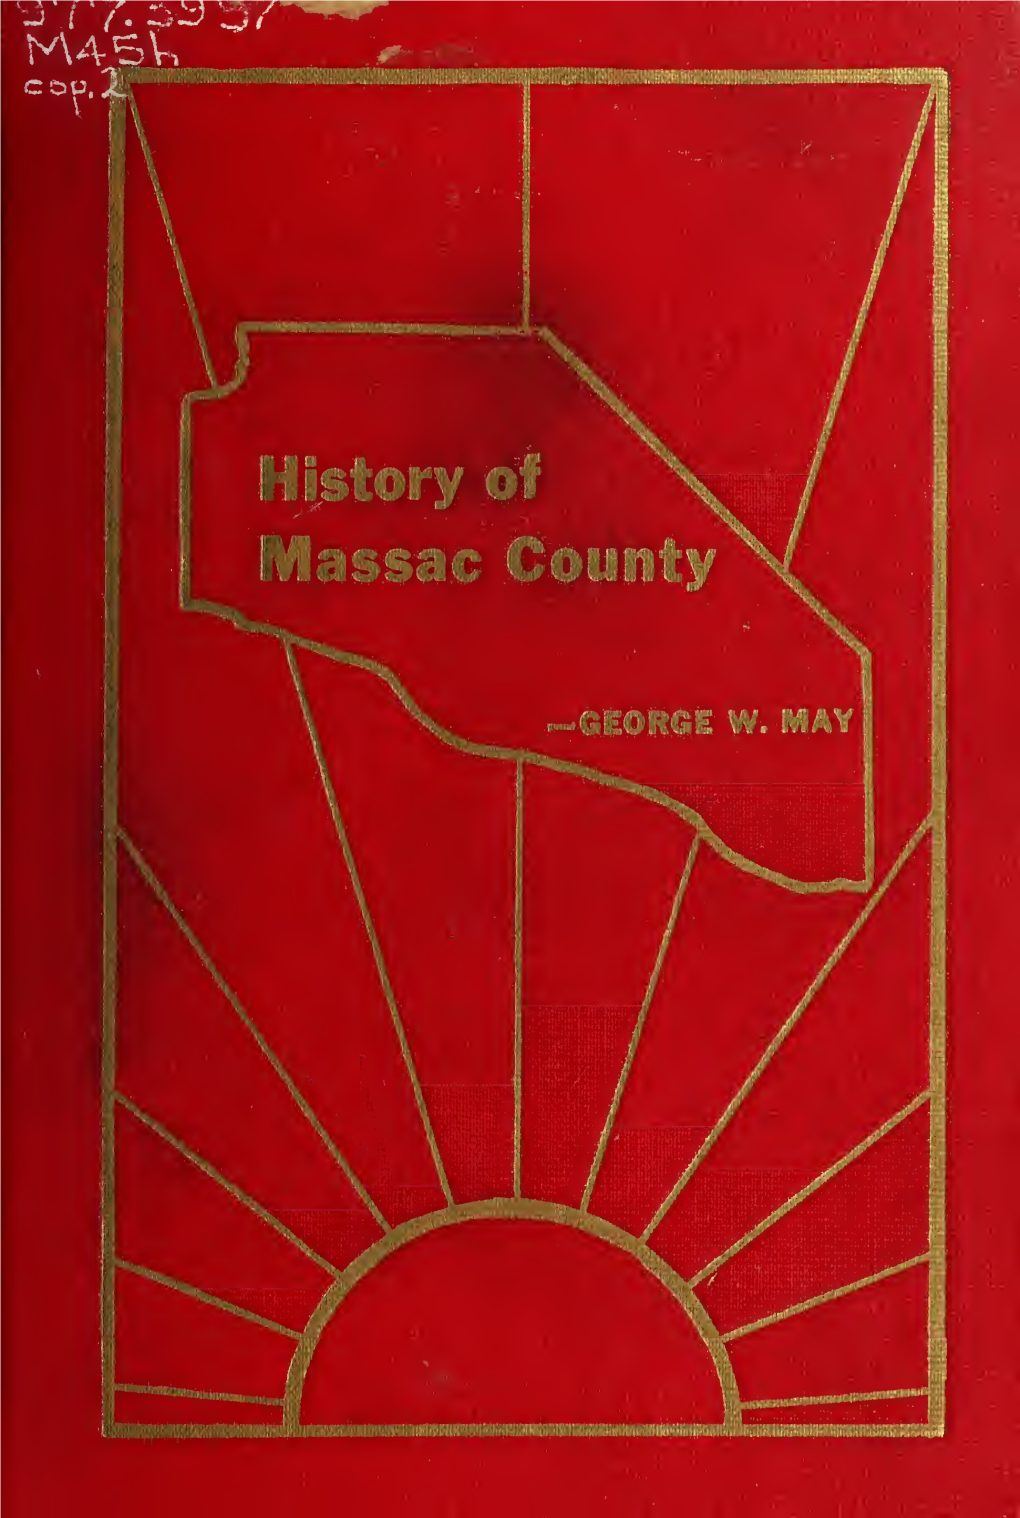 History of Massac County, Illinois, 1955